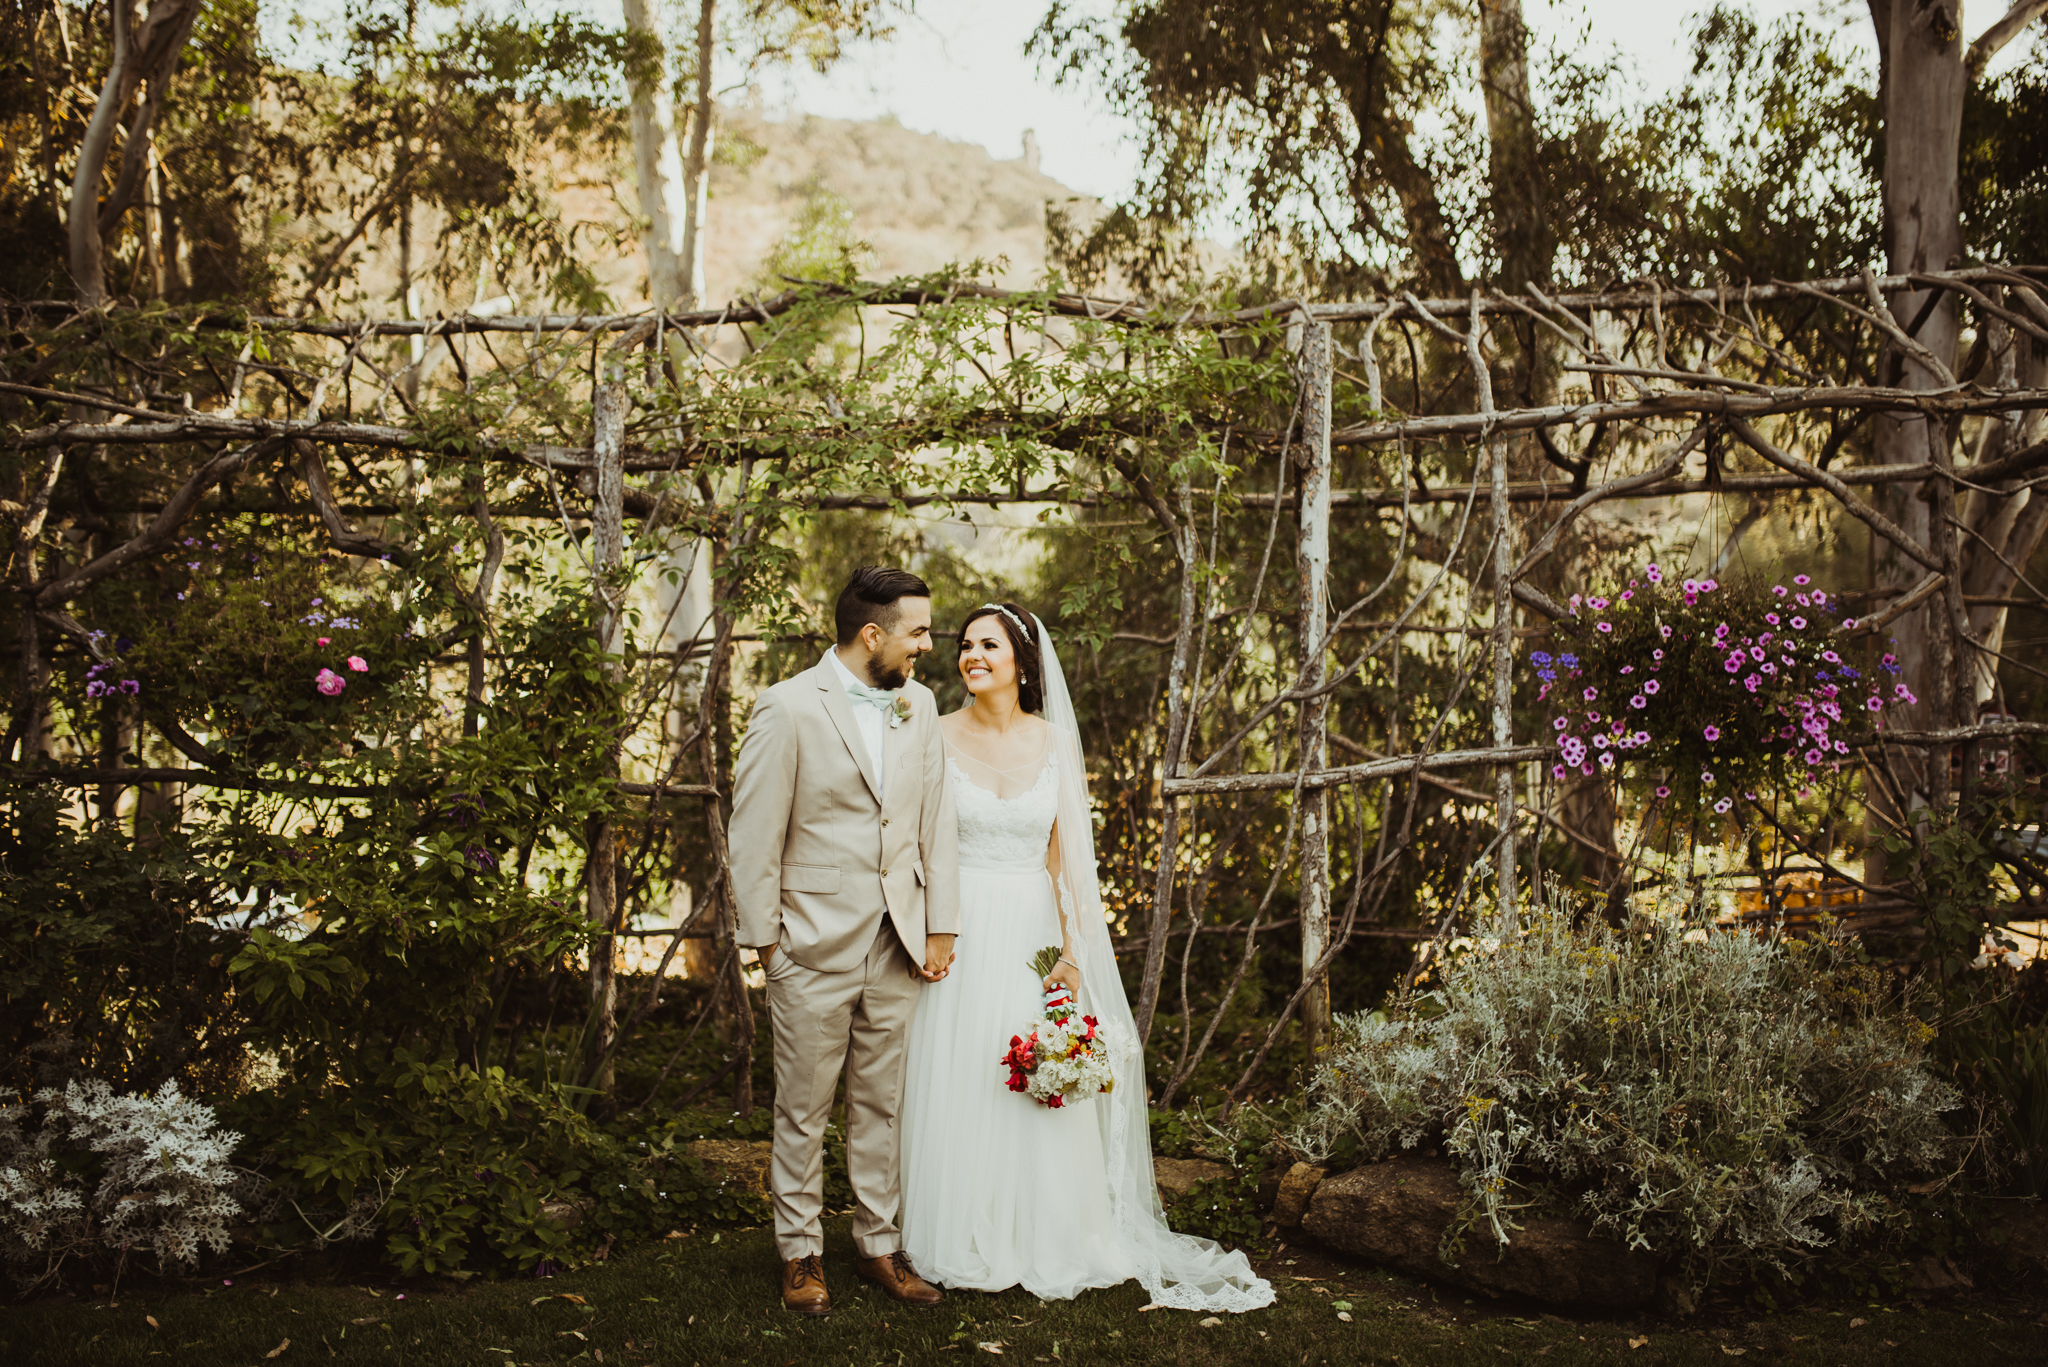 ©Isaiah + Taylor Photography - Brendan + Stefana, Quail Haven Farm Wedding, Vista-104.jpg